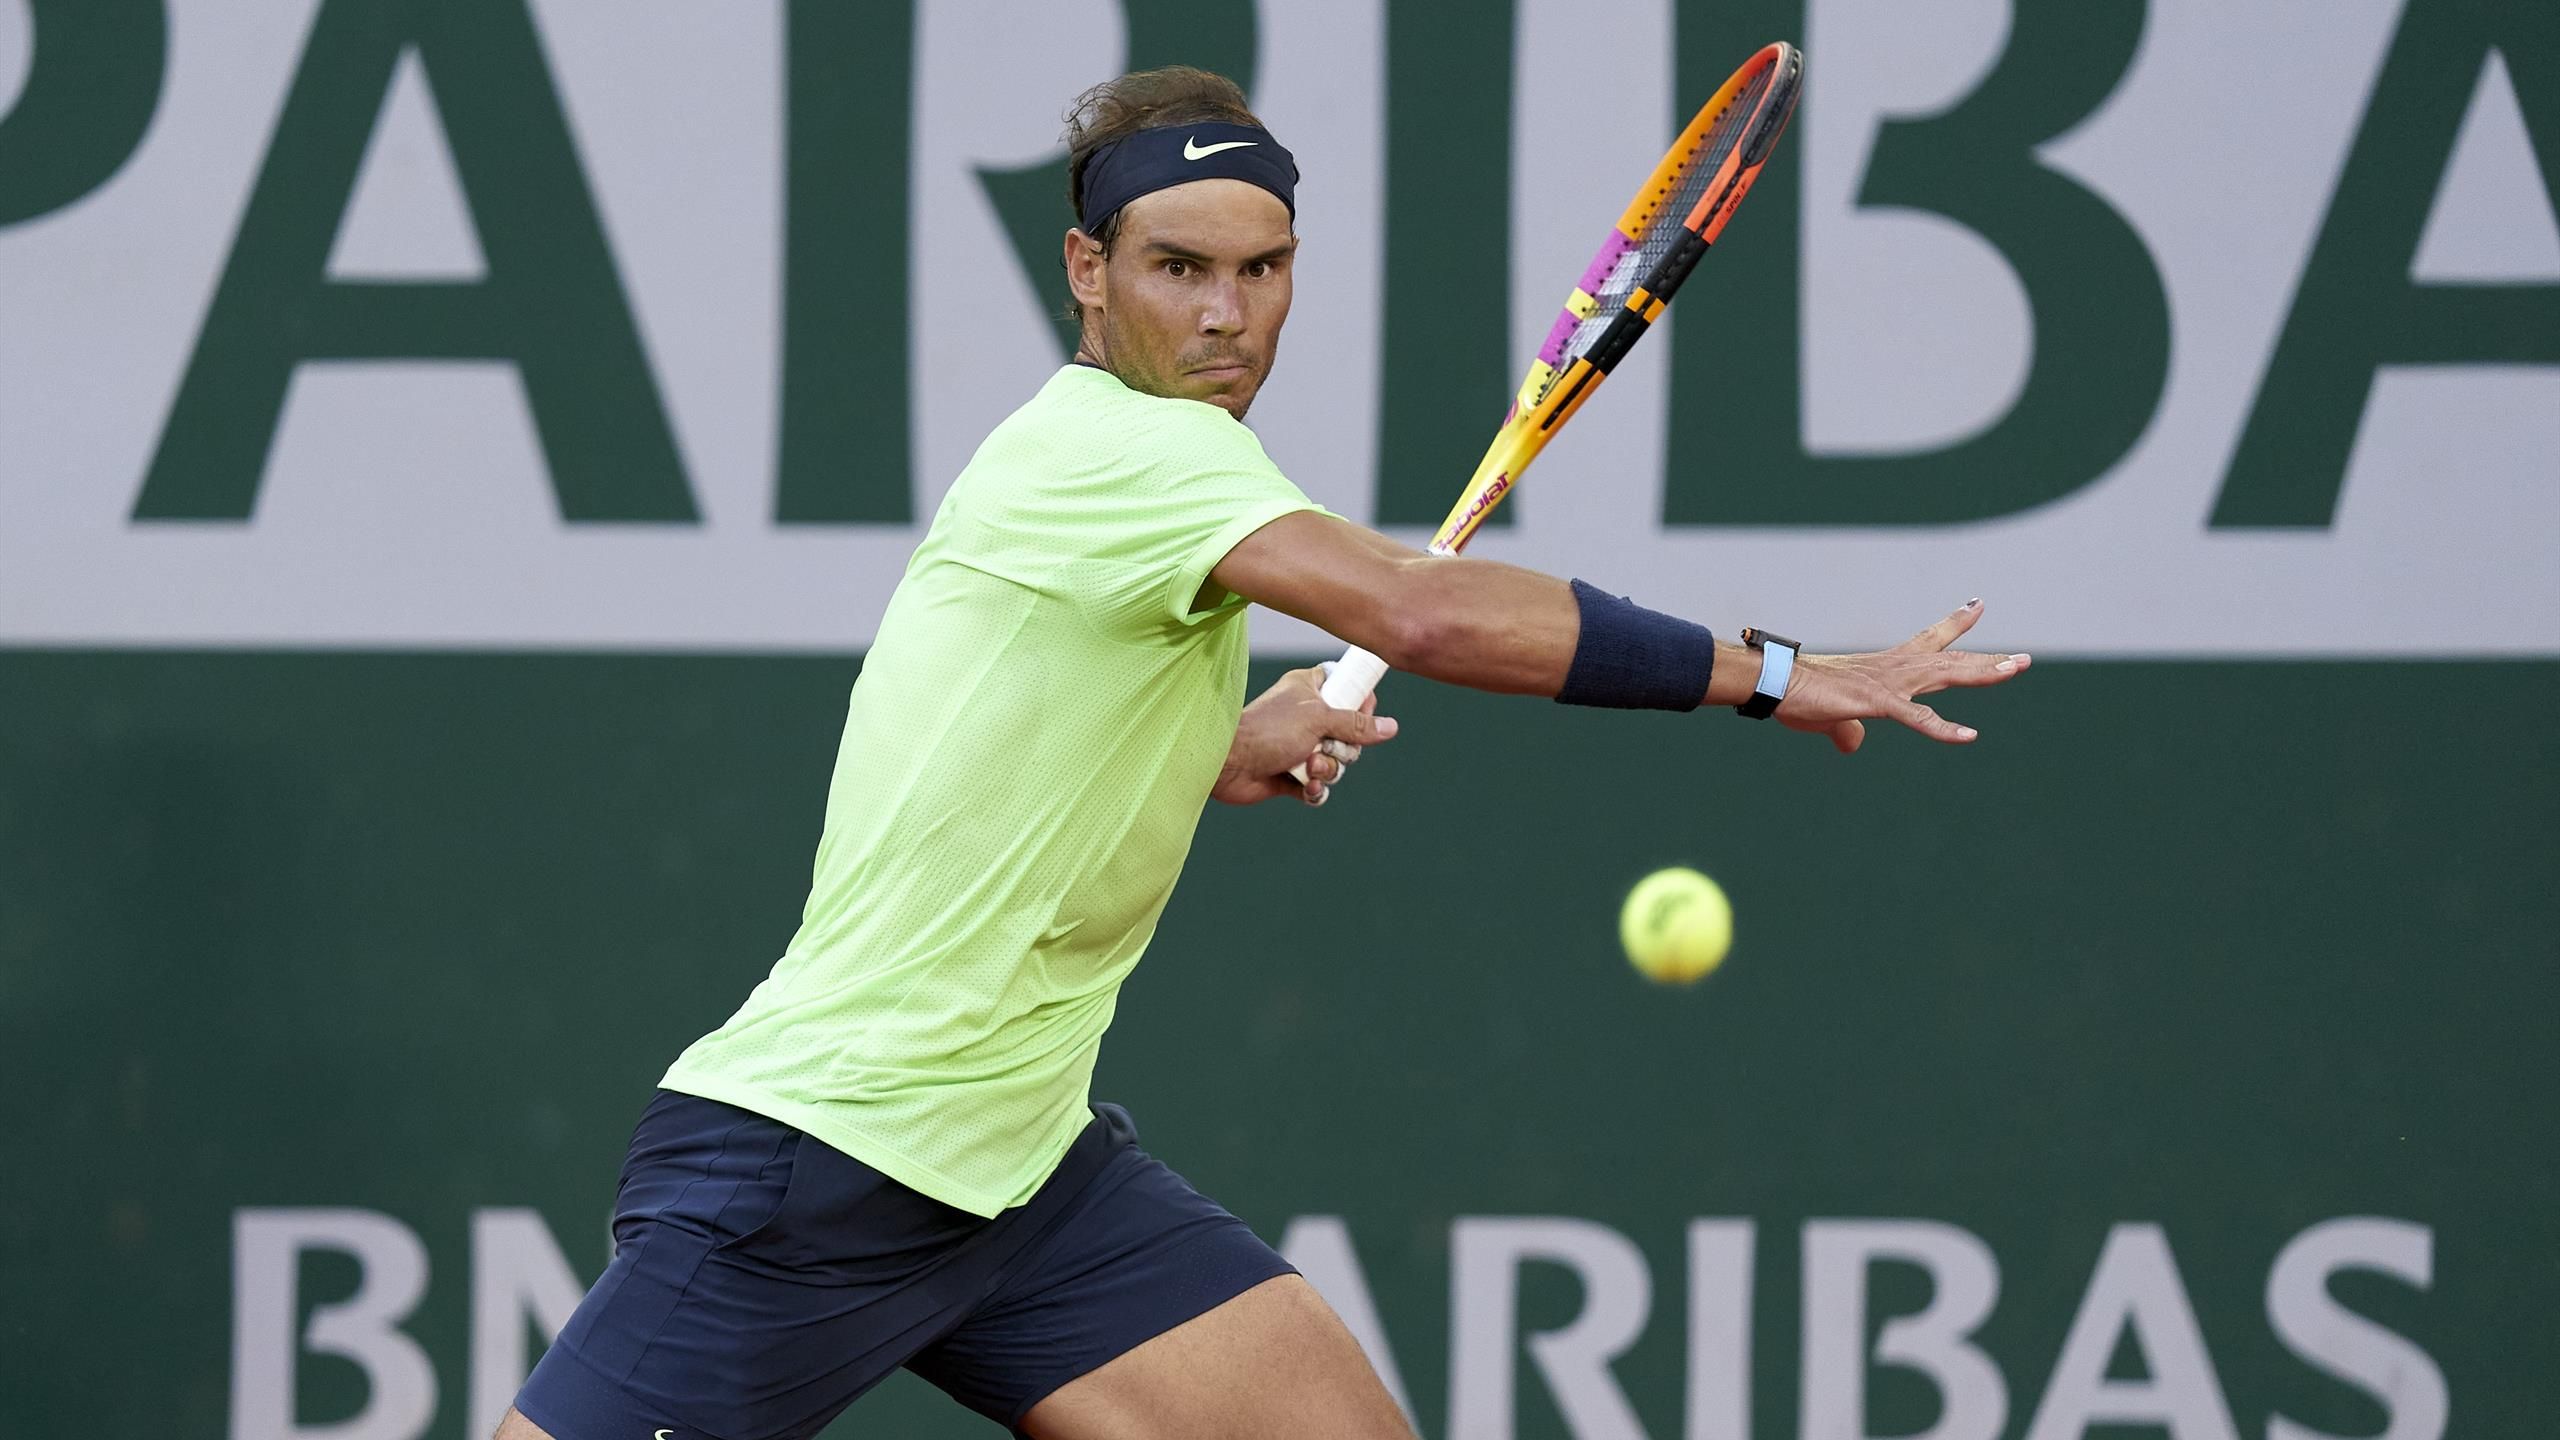 French Open tennis - Rafael Nadal flashes forehand winner down the line against Novak Djokovic - Tennis video